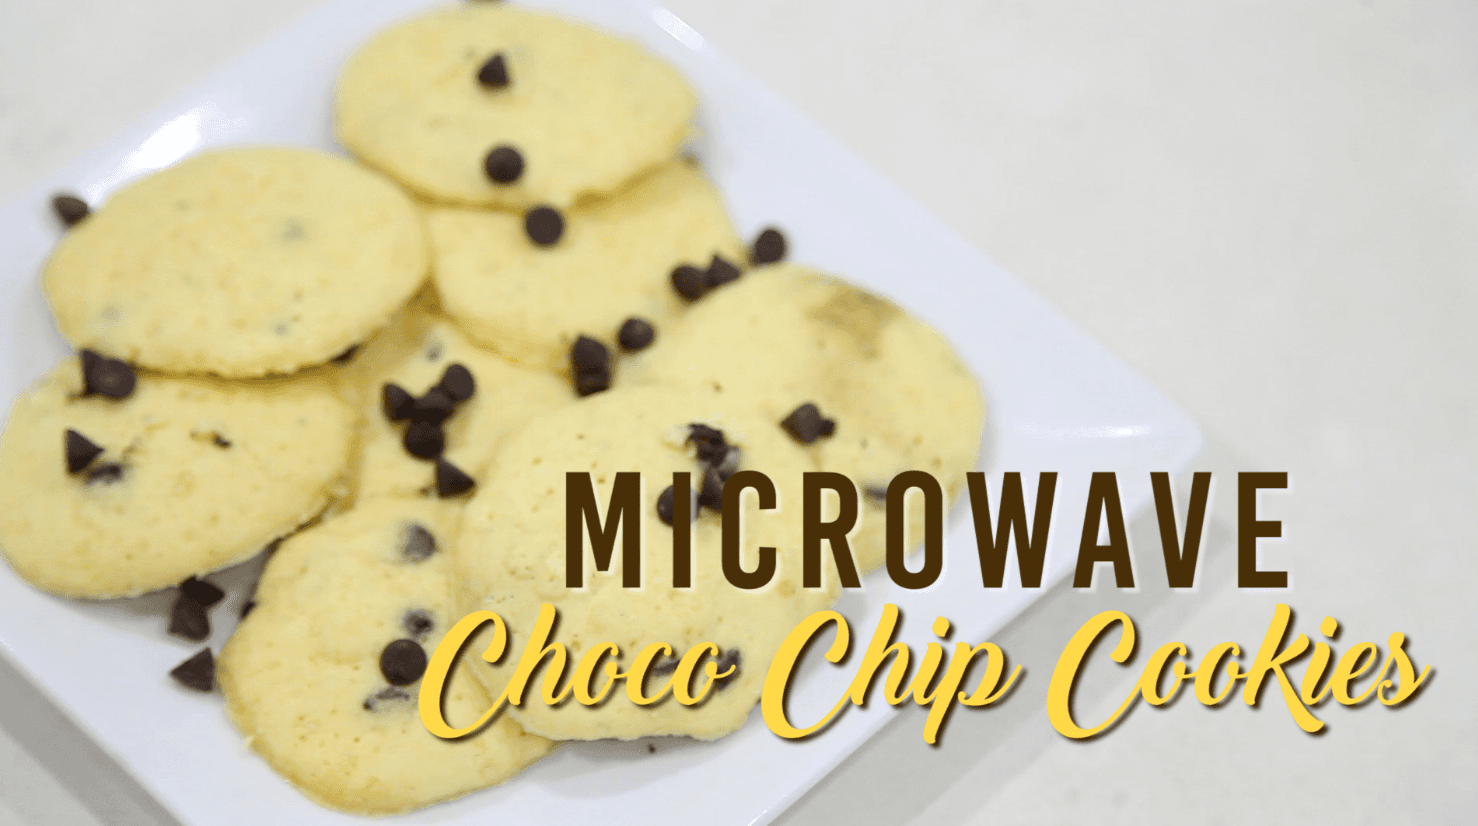 Microwave Choco Chip Cookies